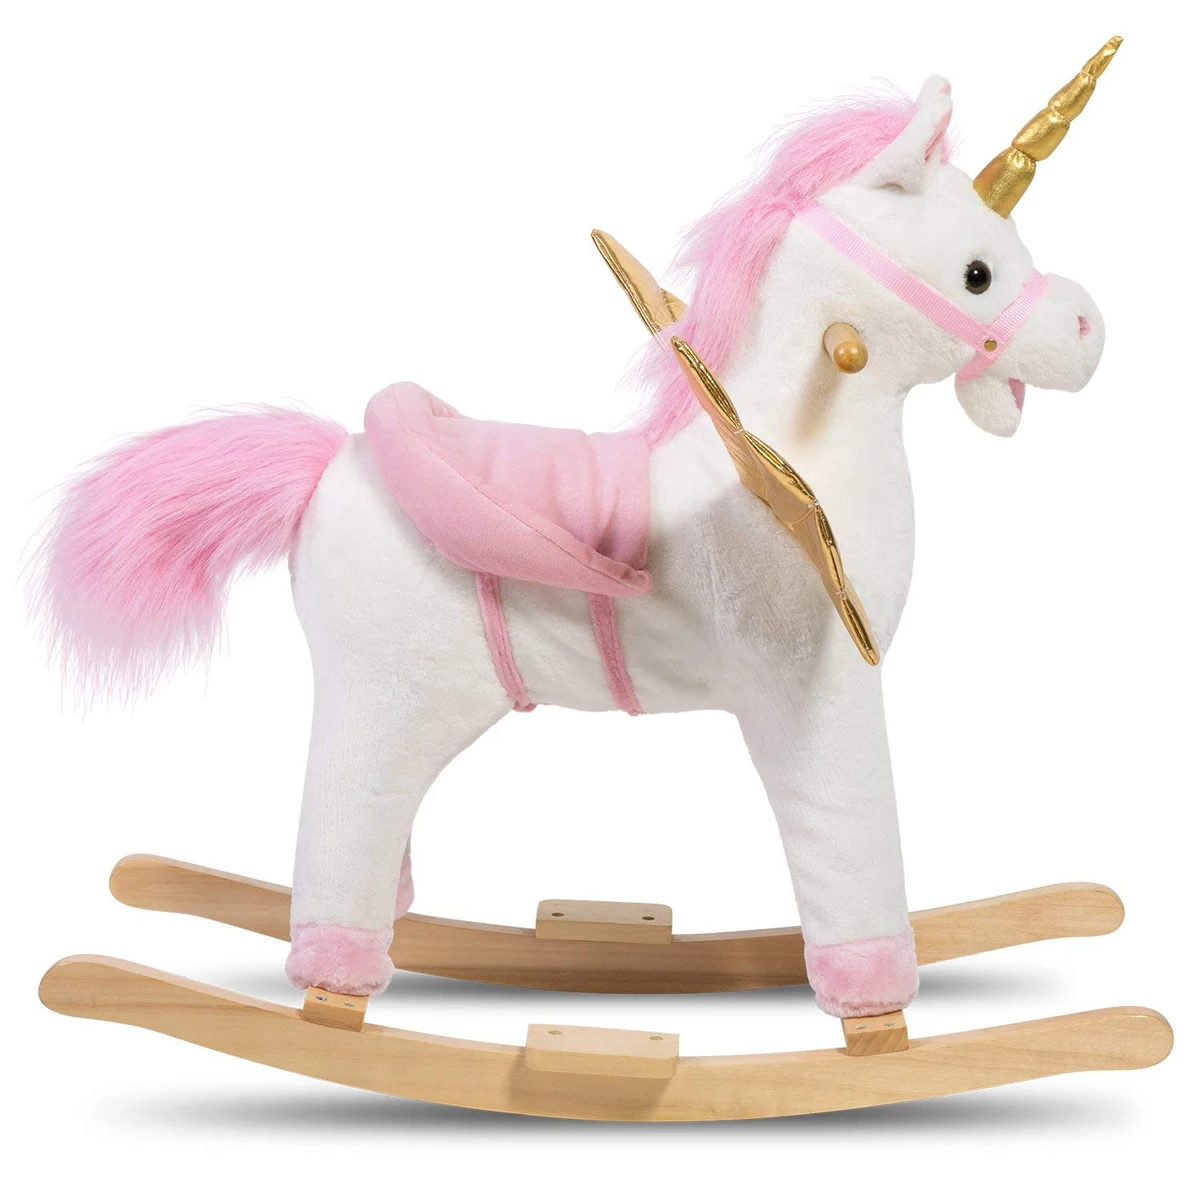 ride on plush unicorn